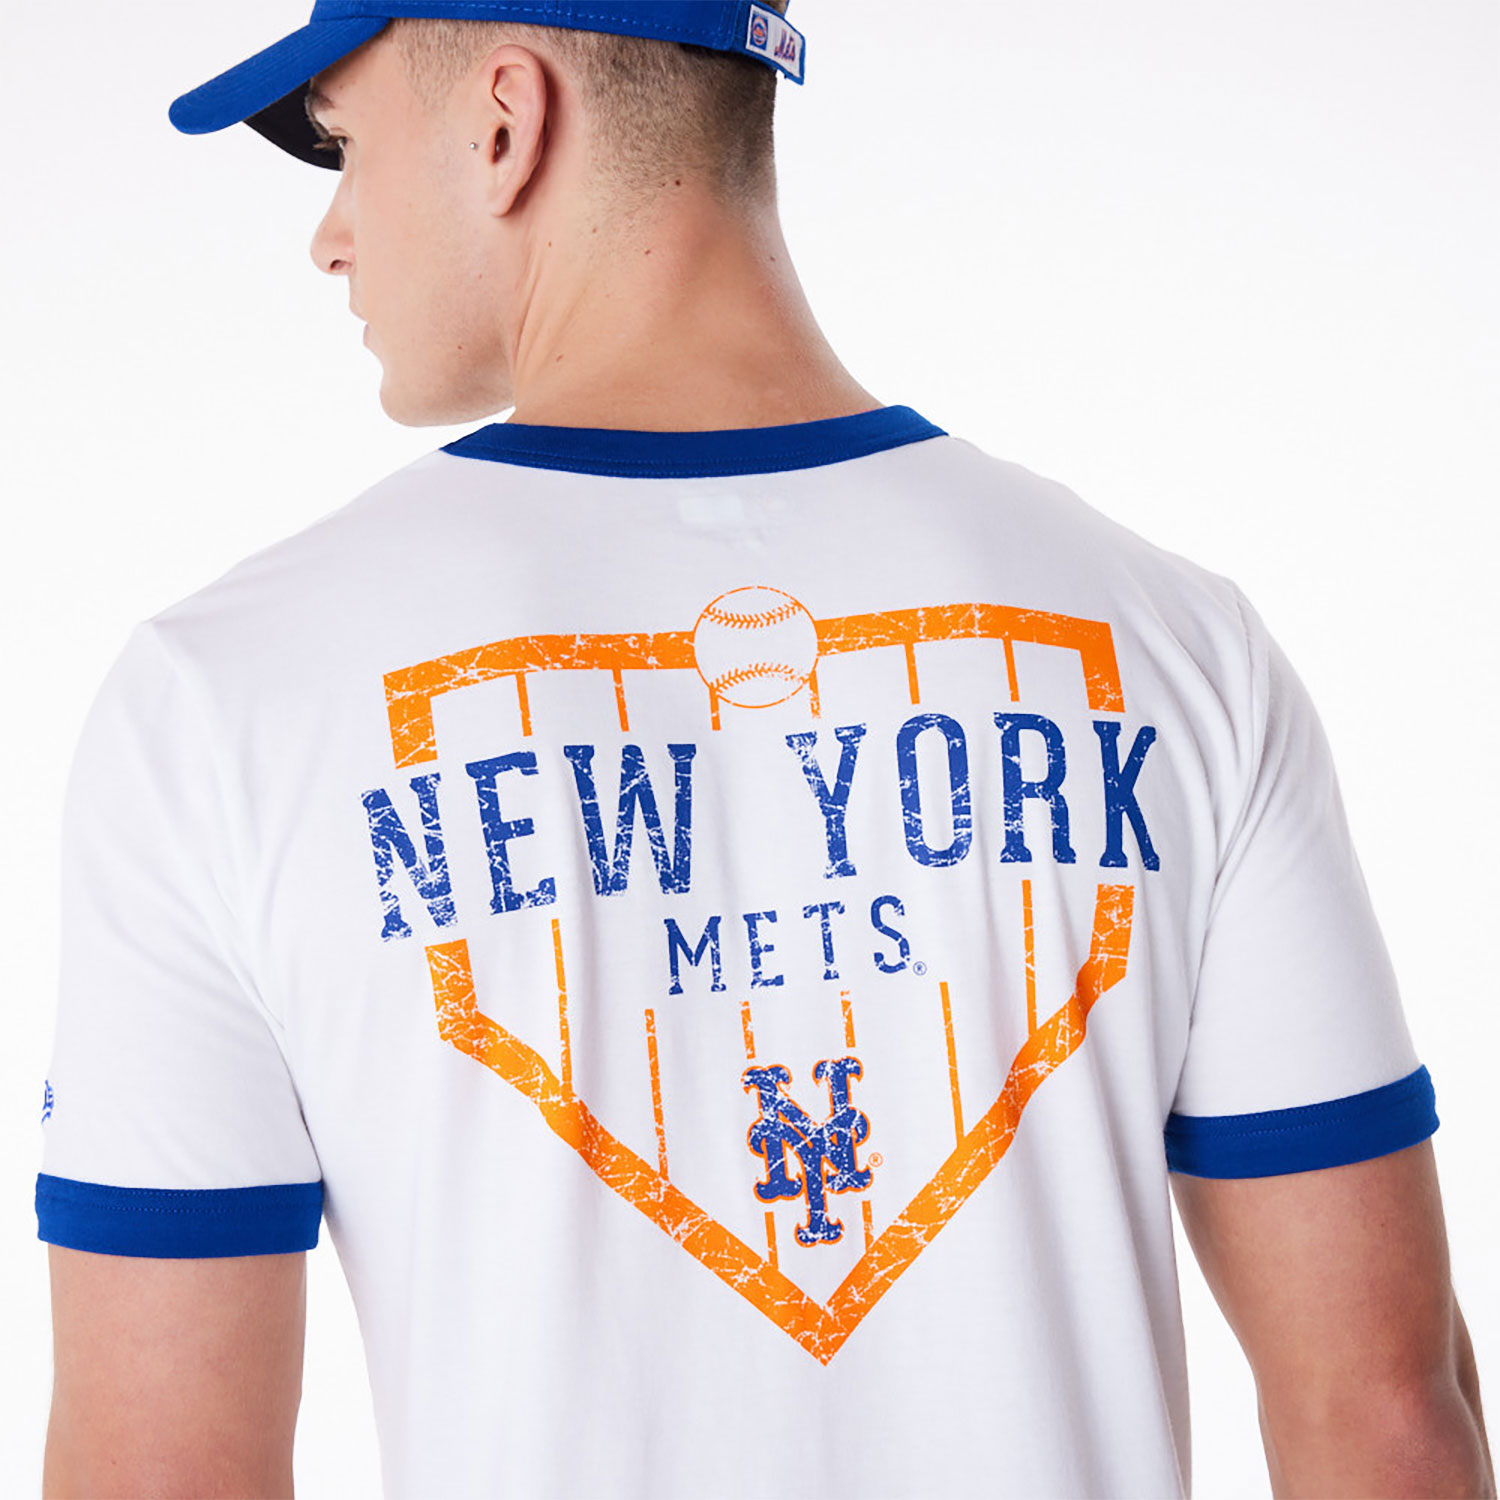 New York Mets MLB Batting Practice White T-Shirt